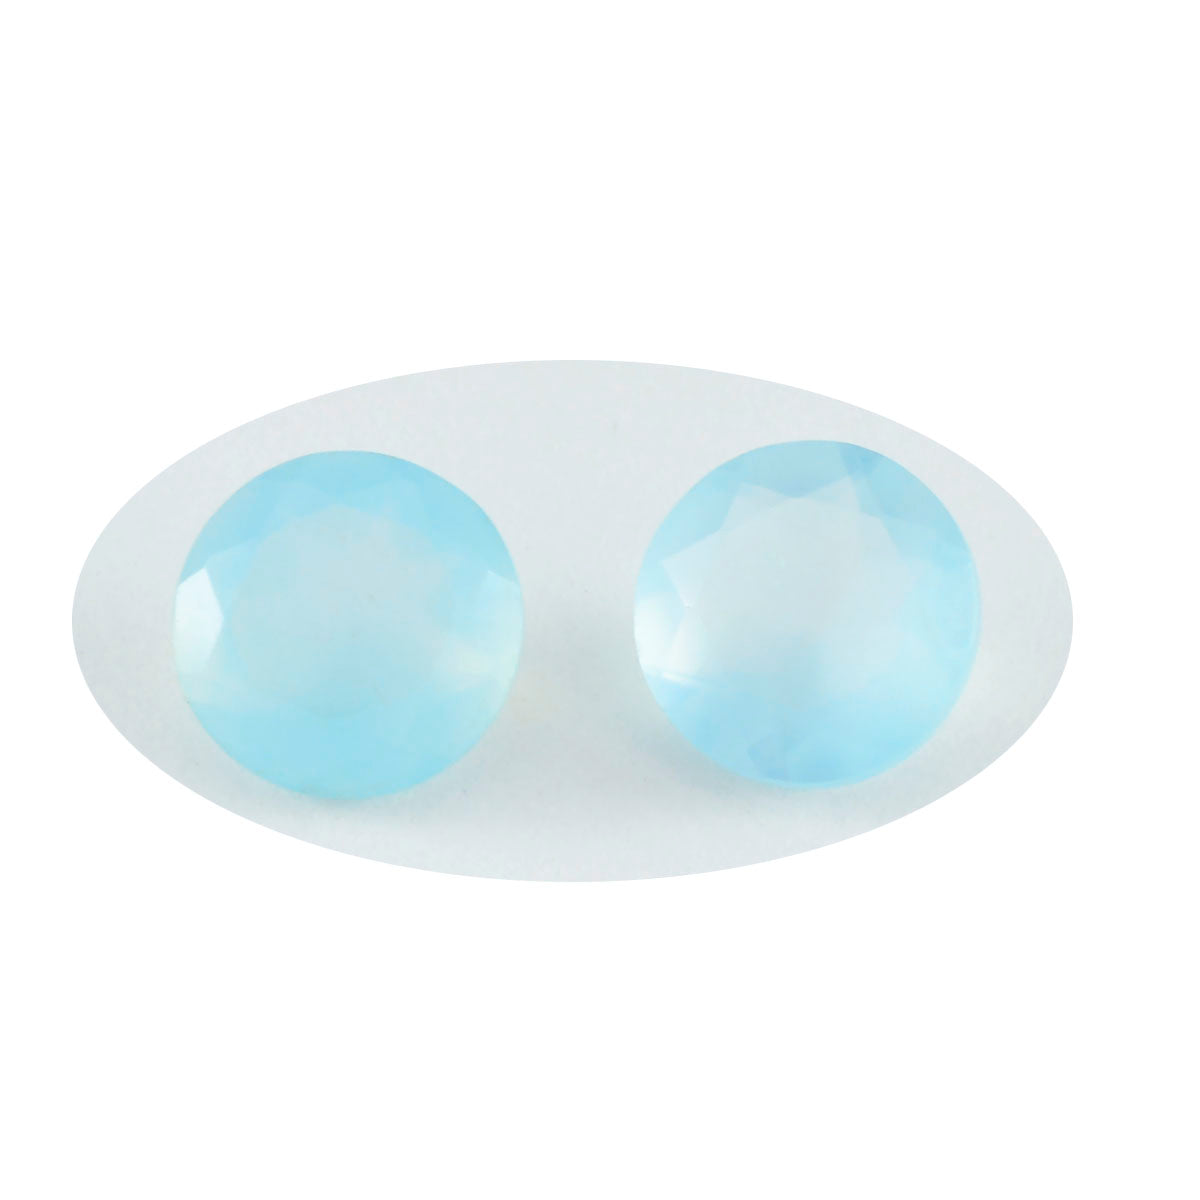 Riyogems 1PC Natural Aqua Chalcedony Faceted 11x11 mm Round Shape cute Quality Gems